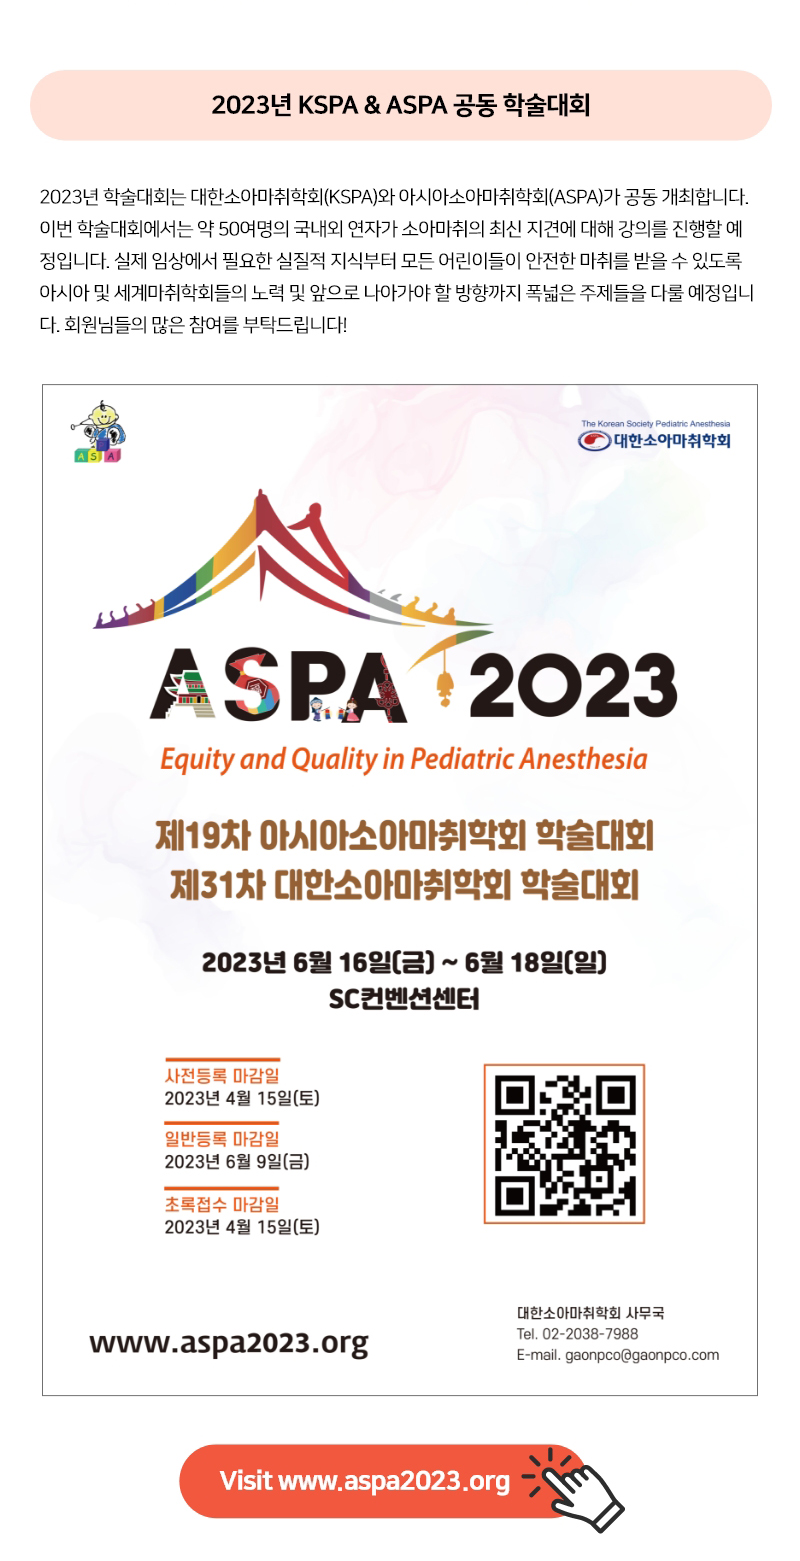 ASPA 2023